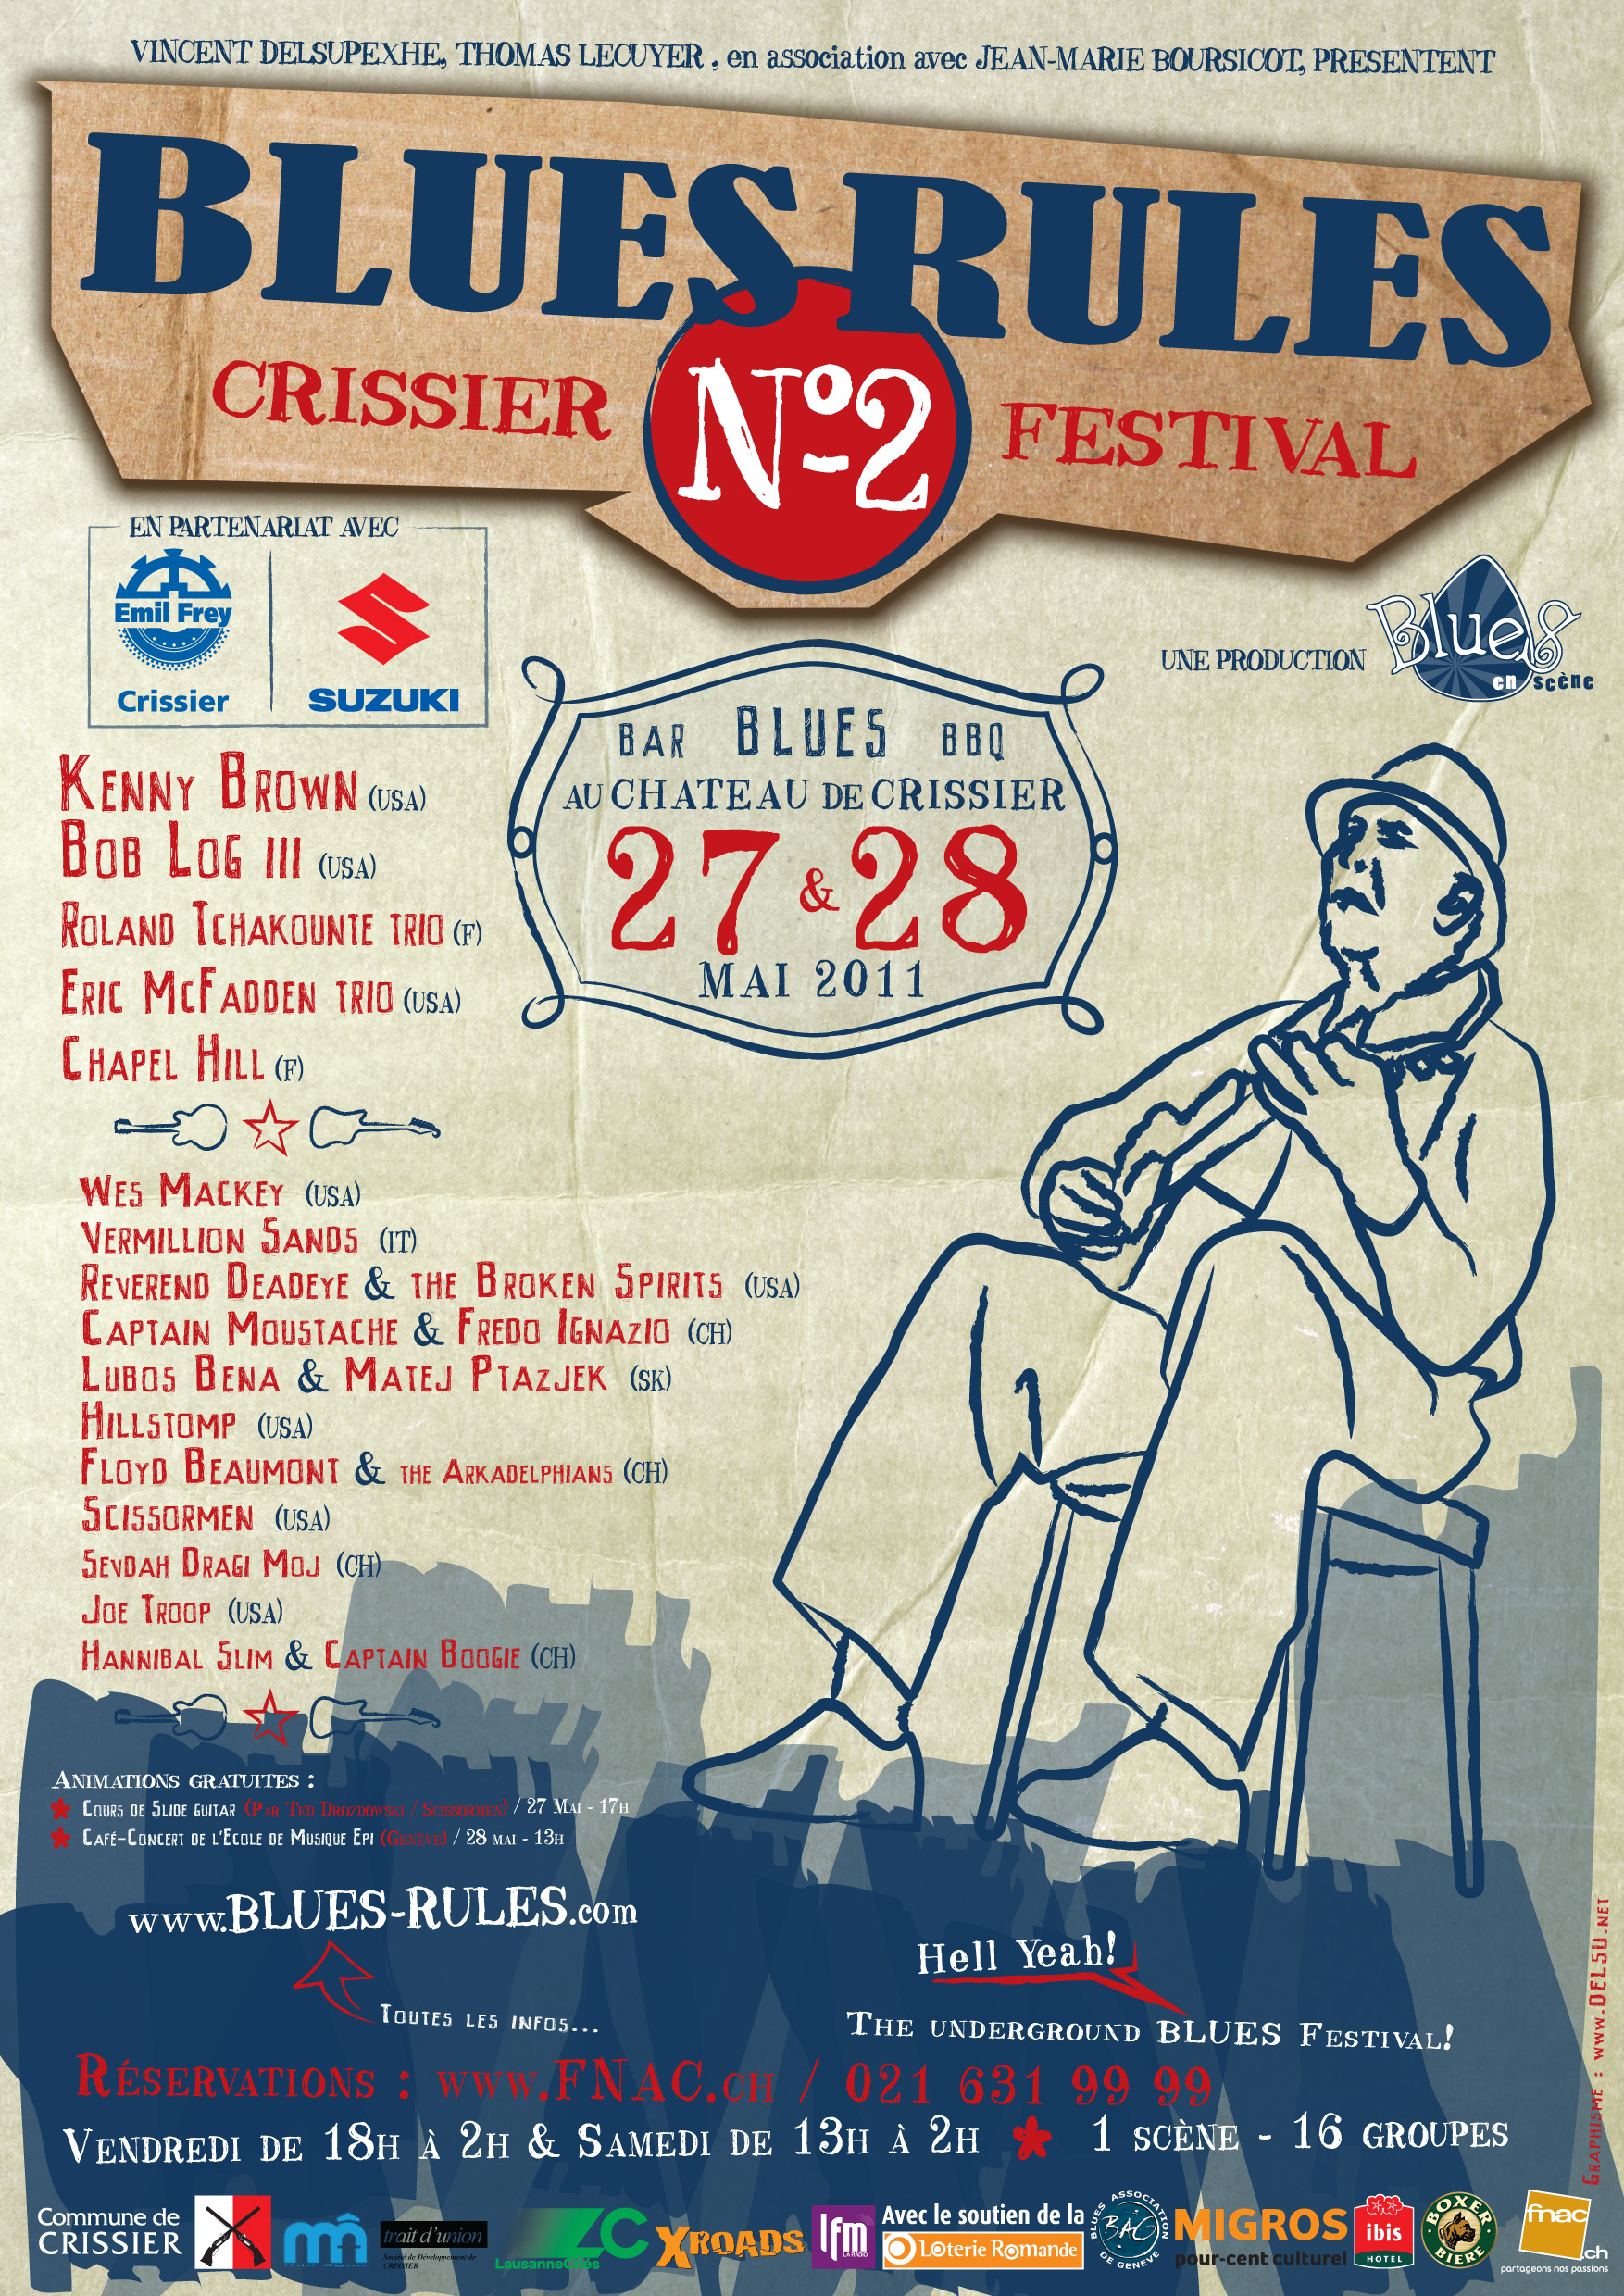 Blues Rules Crissier Festival 2011